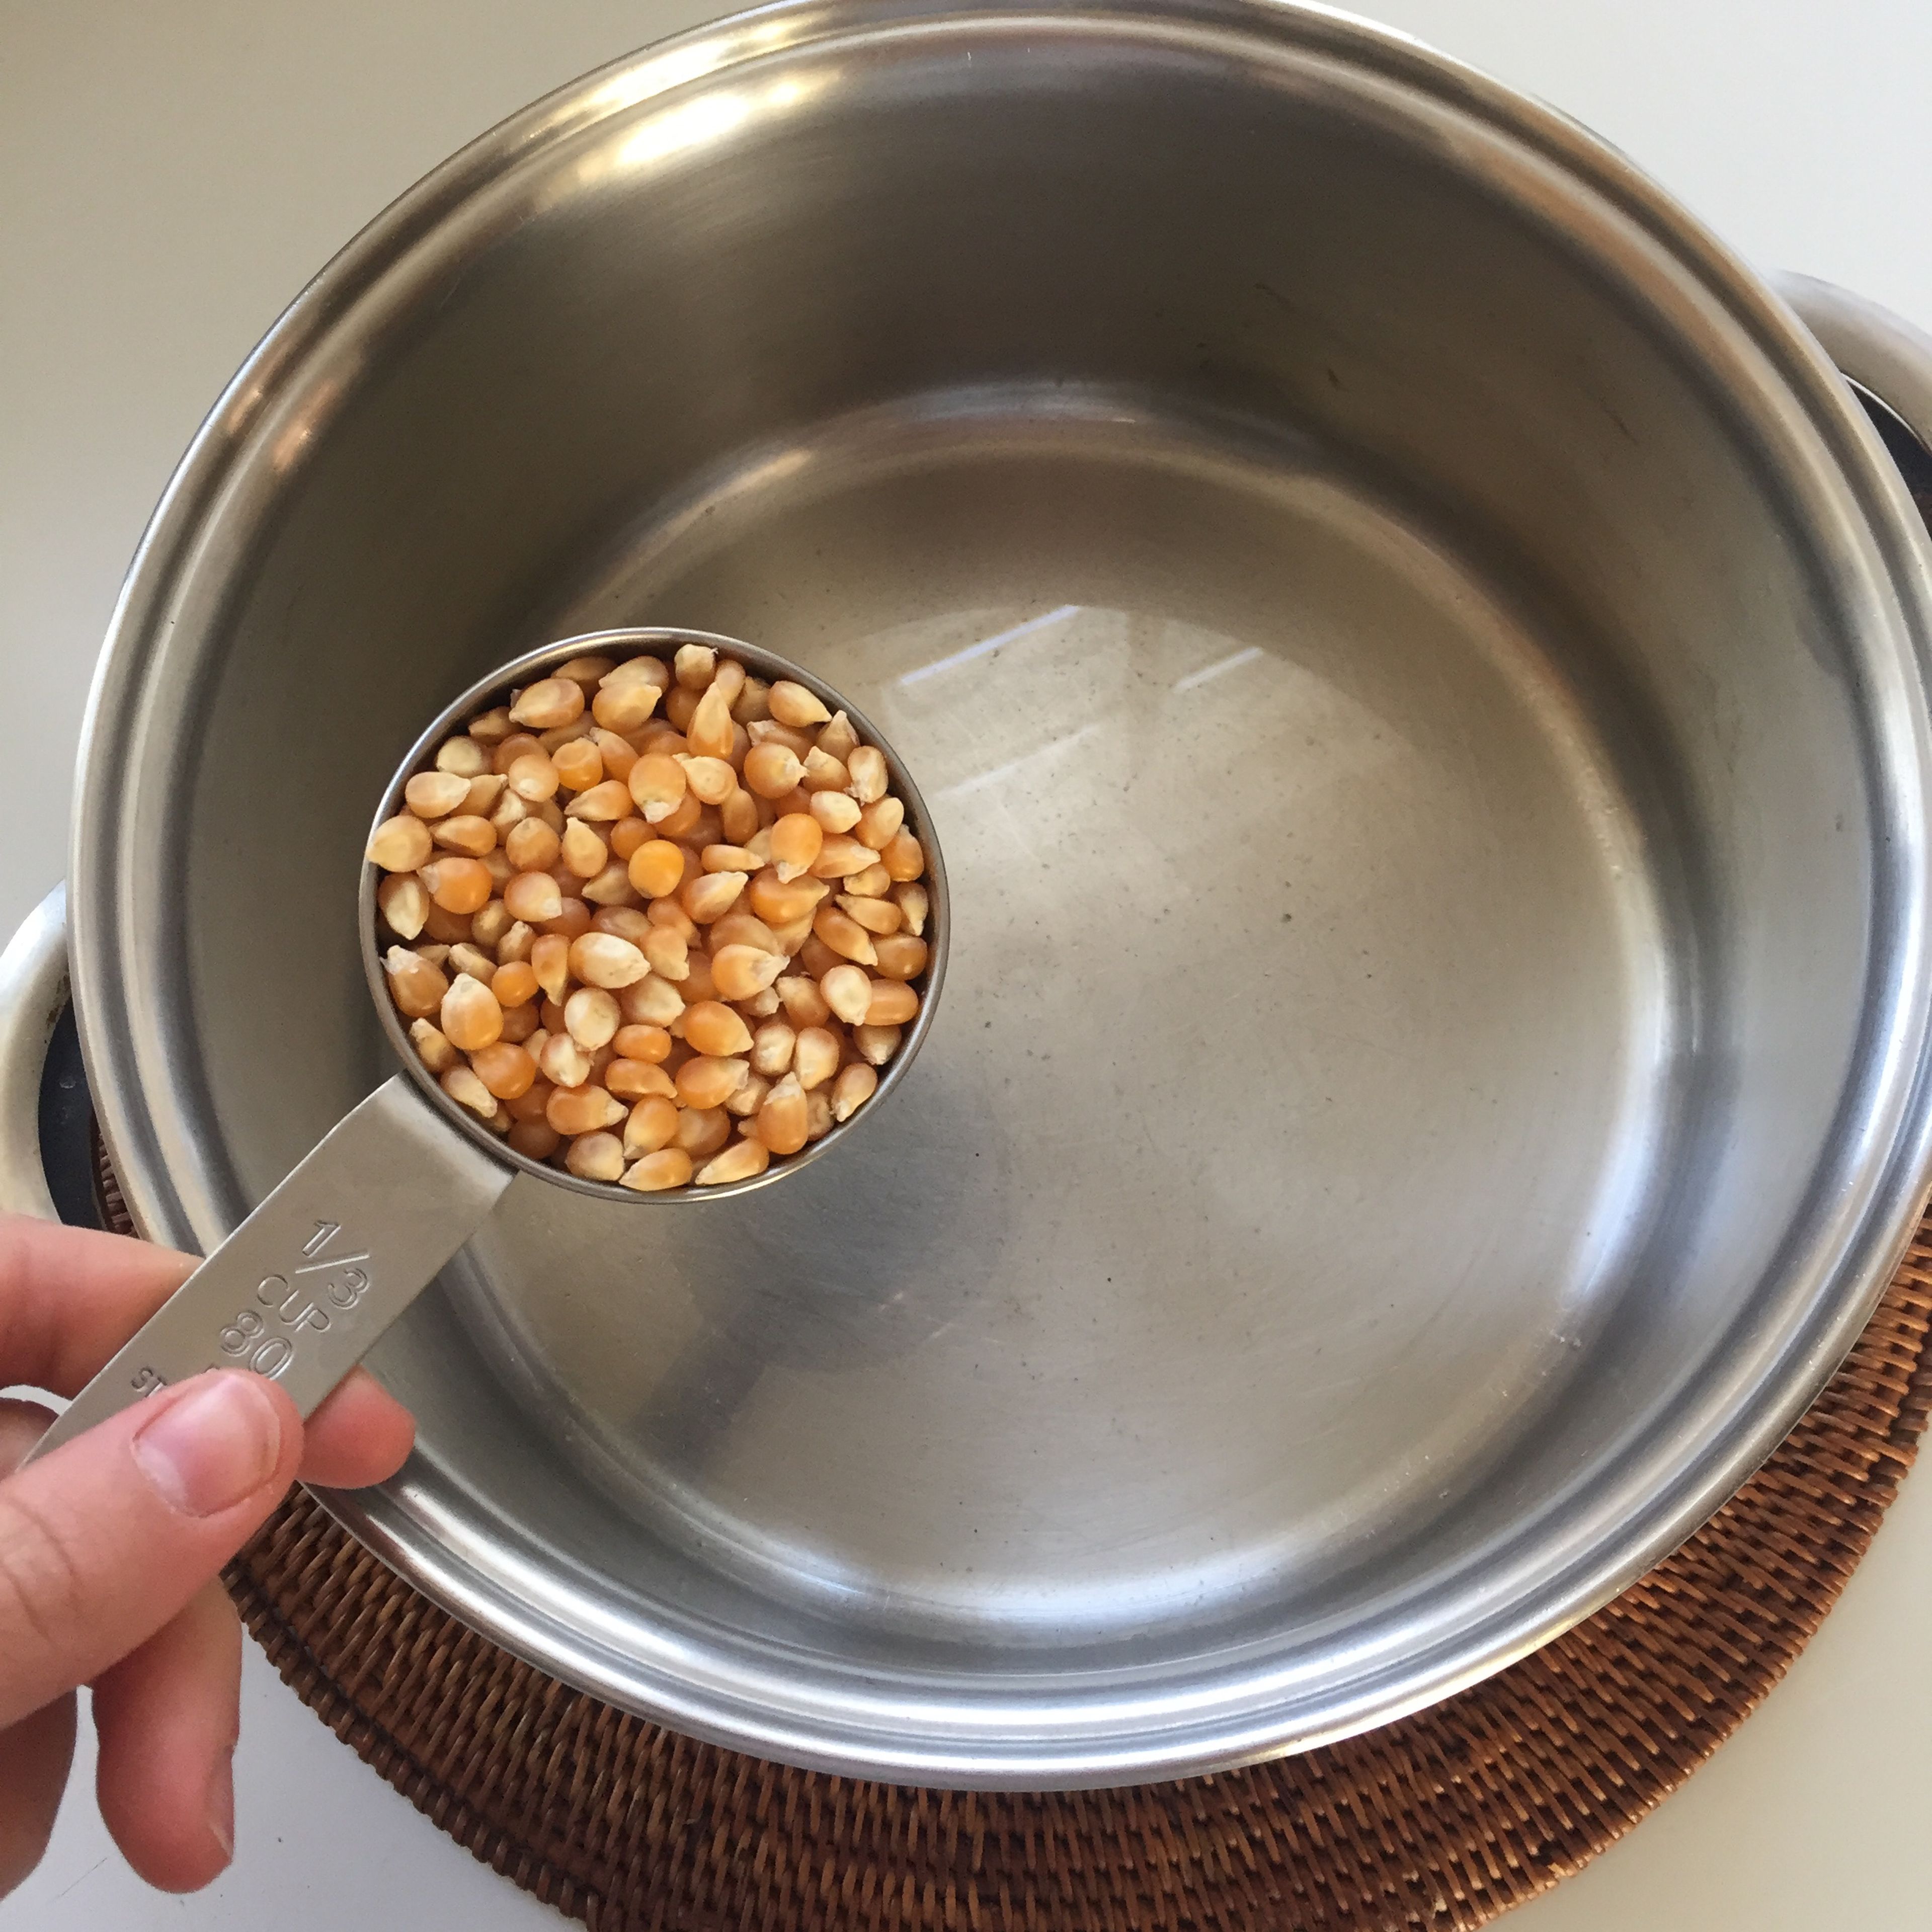 Pour the popcorn kernels (about 1/3 cup)